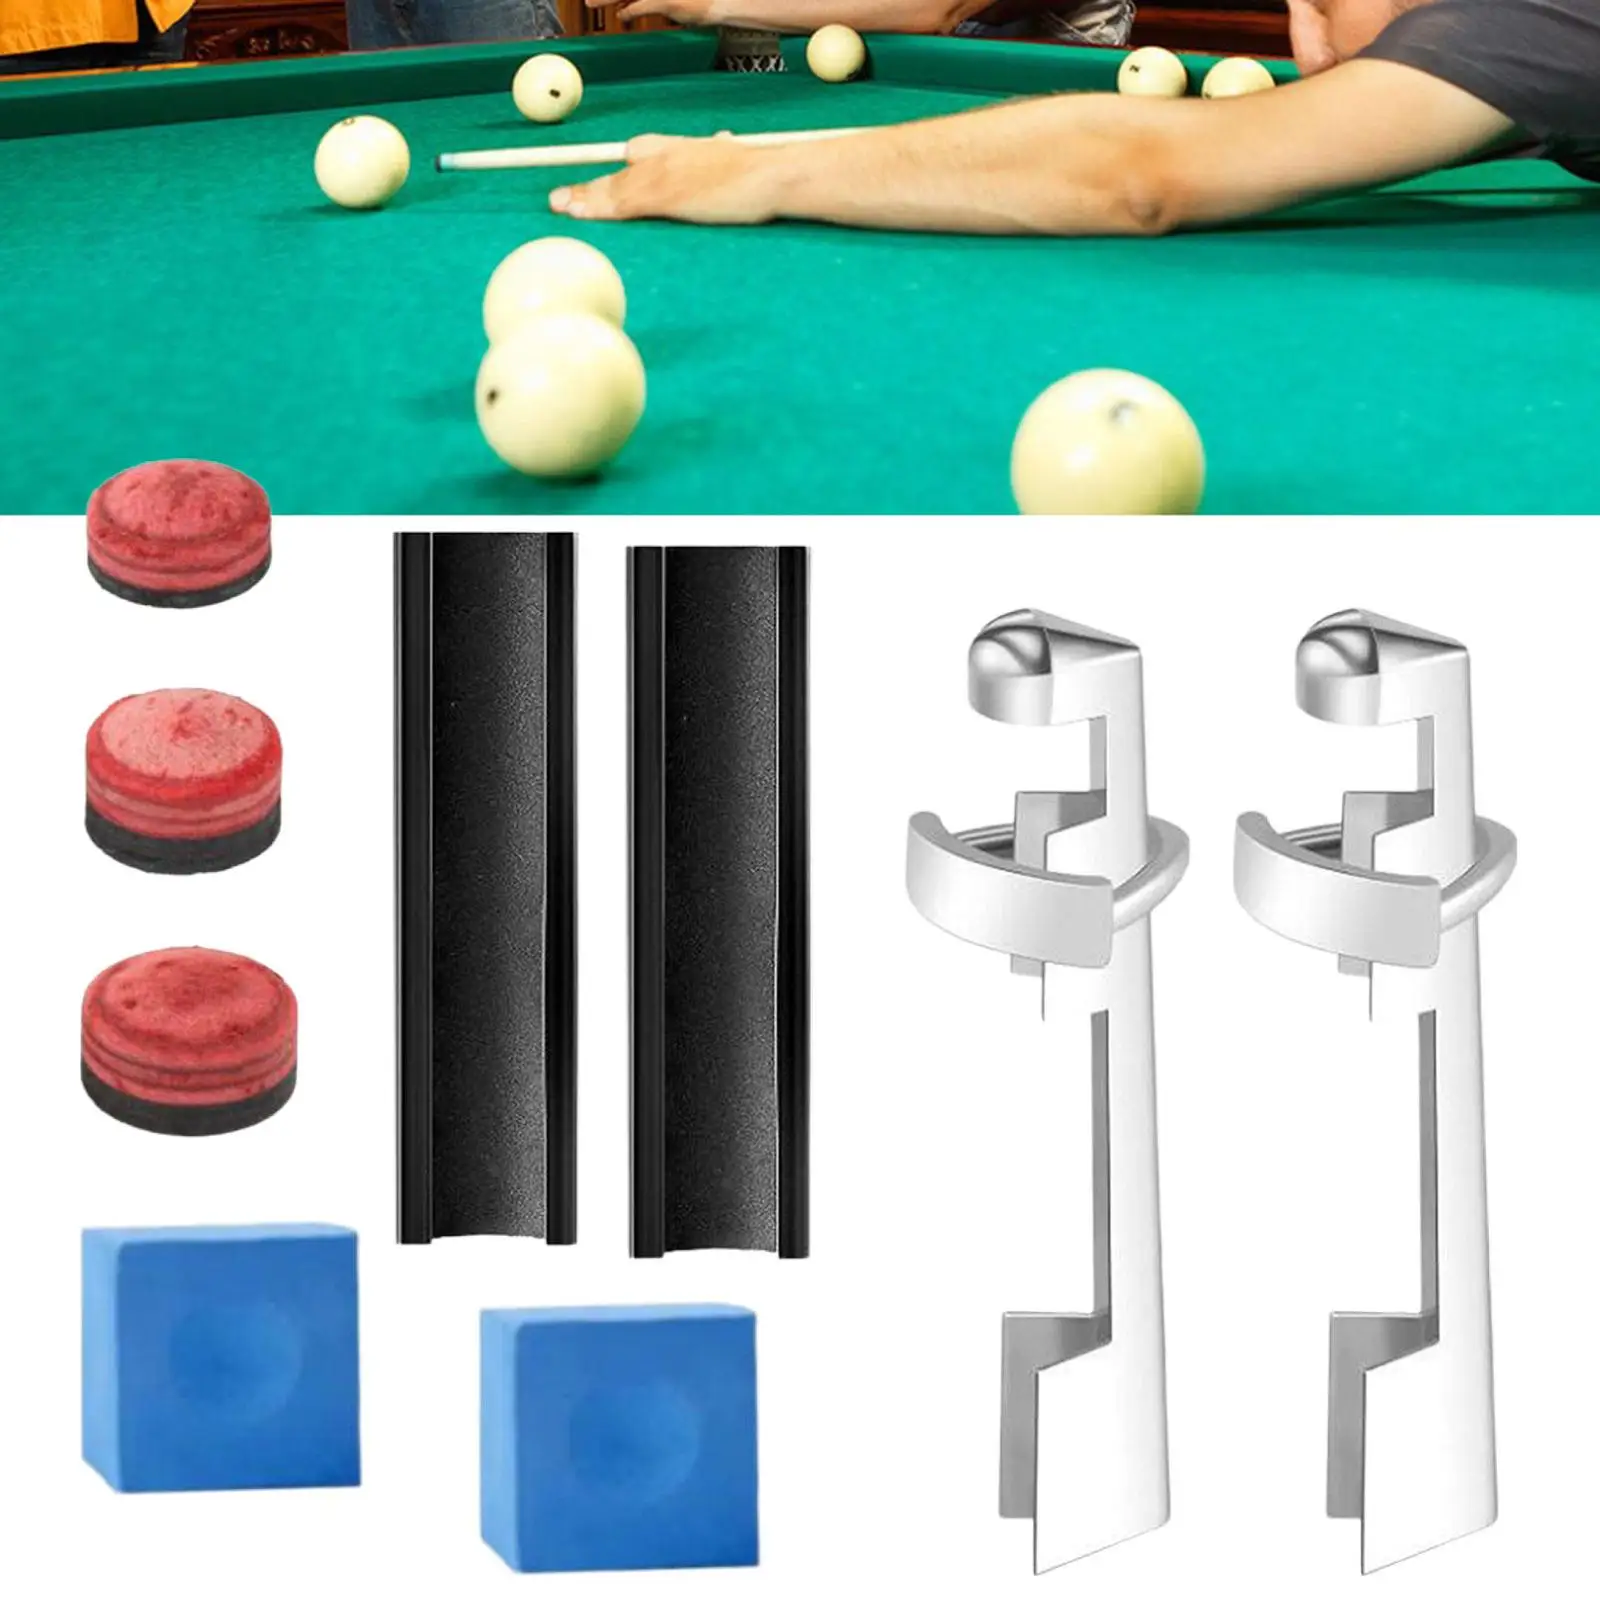 9Pcs Pool Cue Tip Repair Kit Snooker Pool Supplies Professional Billiards Cue Stick for Training Pool Table Beginners Practice